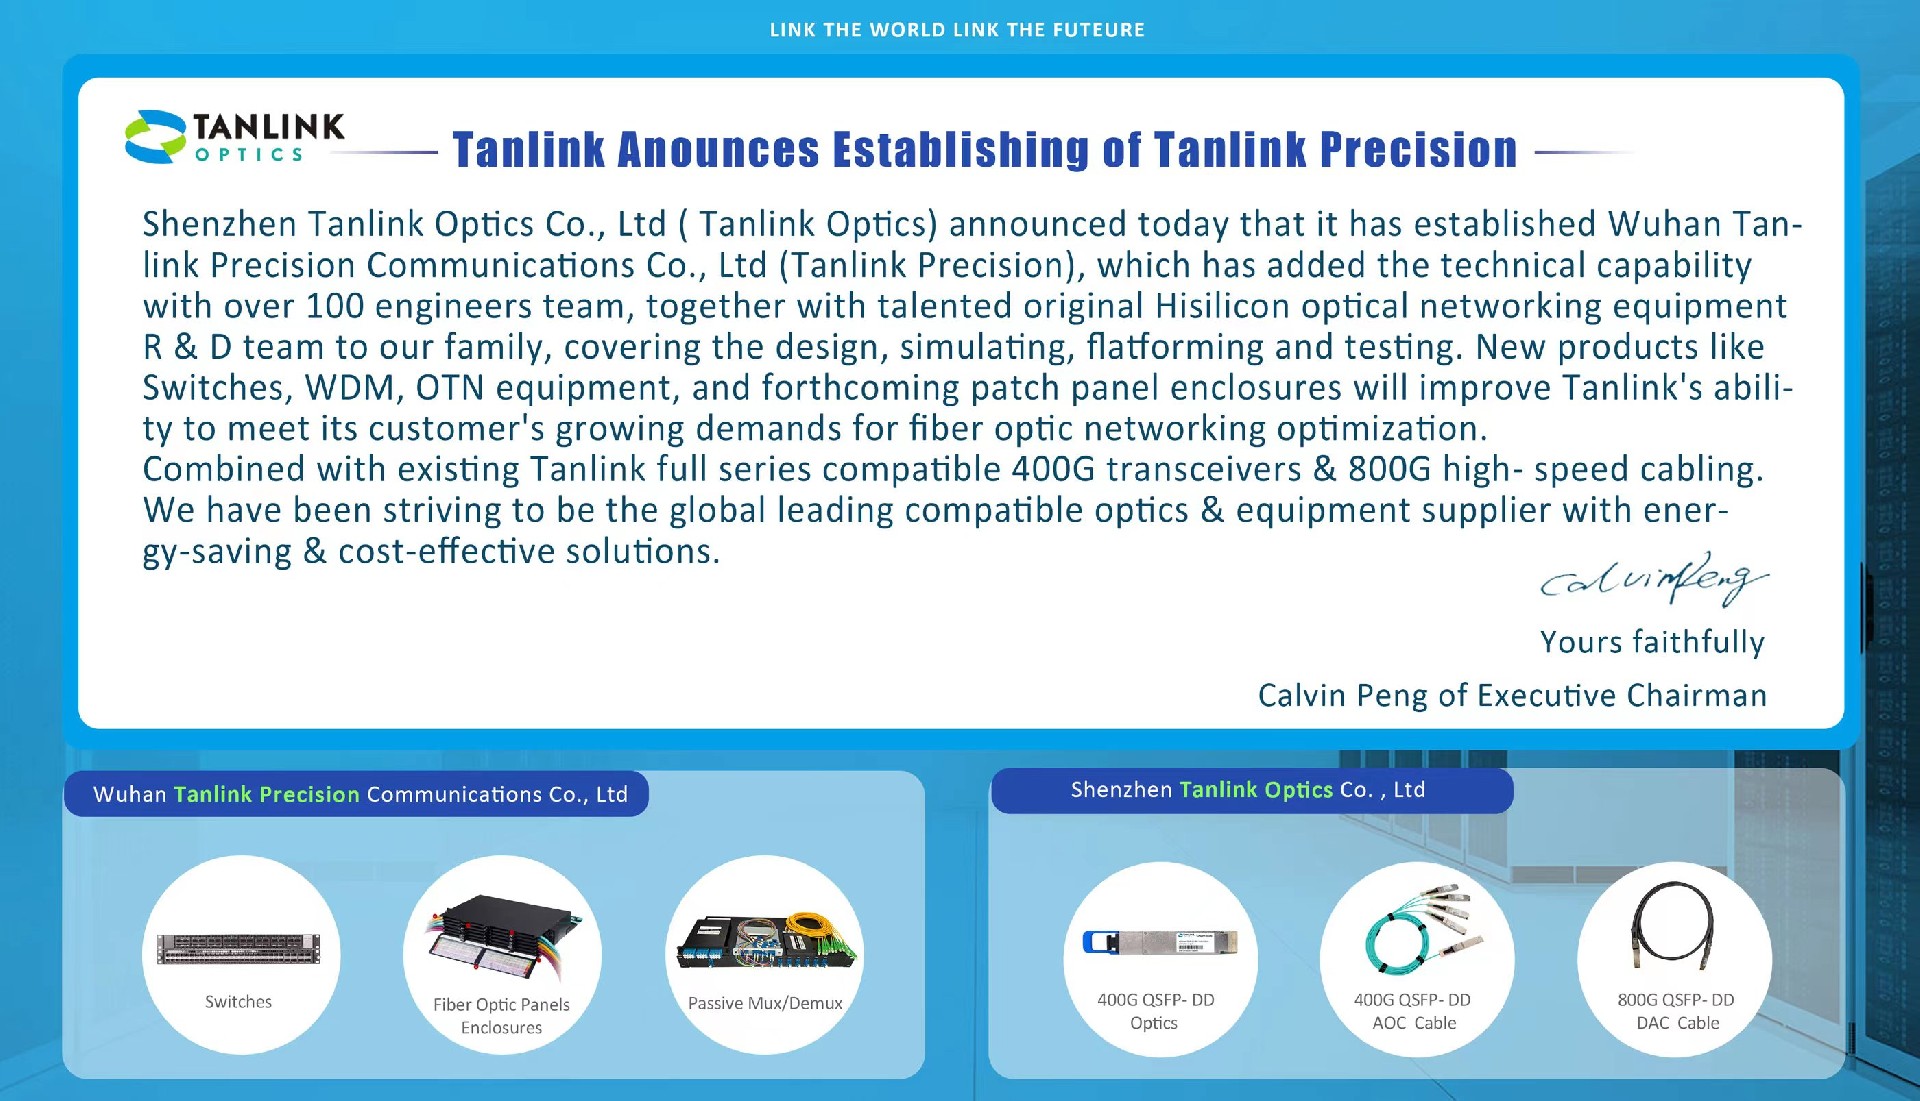 Tanlink Announces Establishing of Tanlink Precision